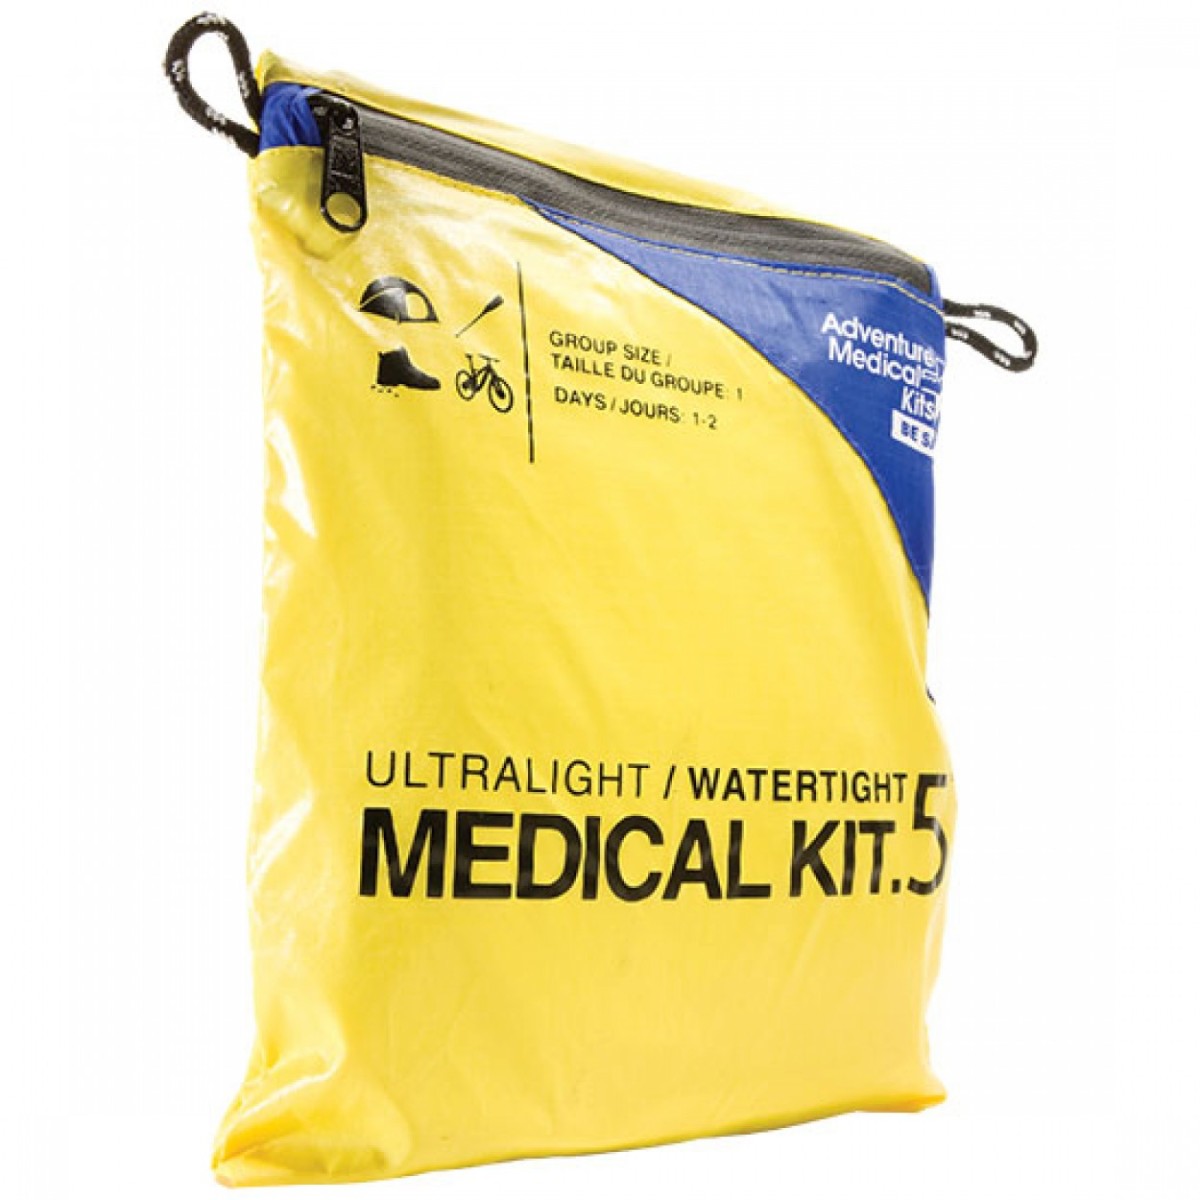 Adventure Medical Kits Ultralight / Watertight .5